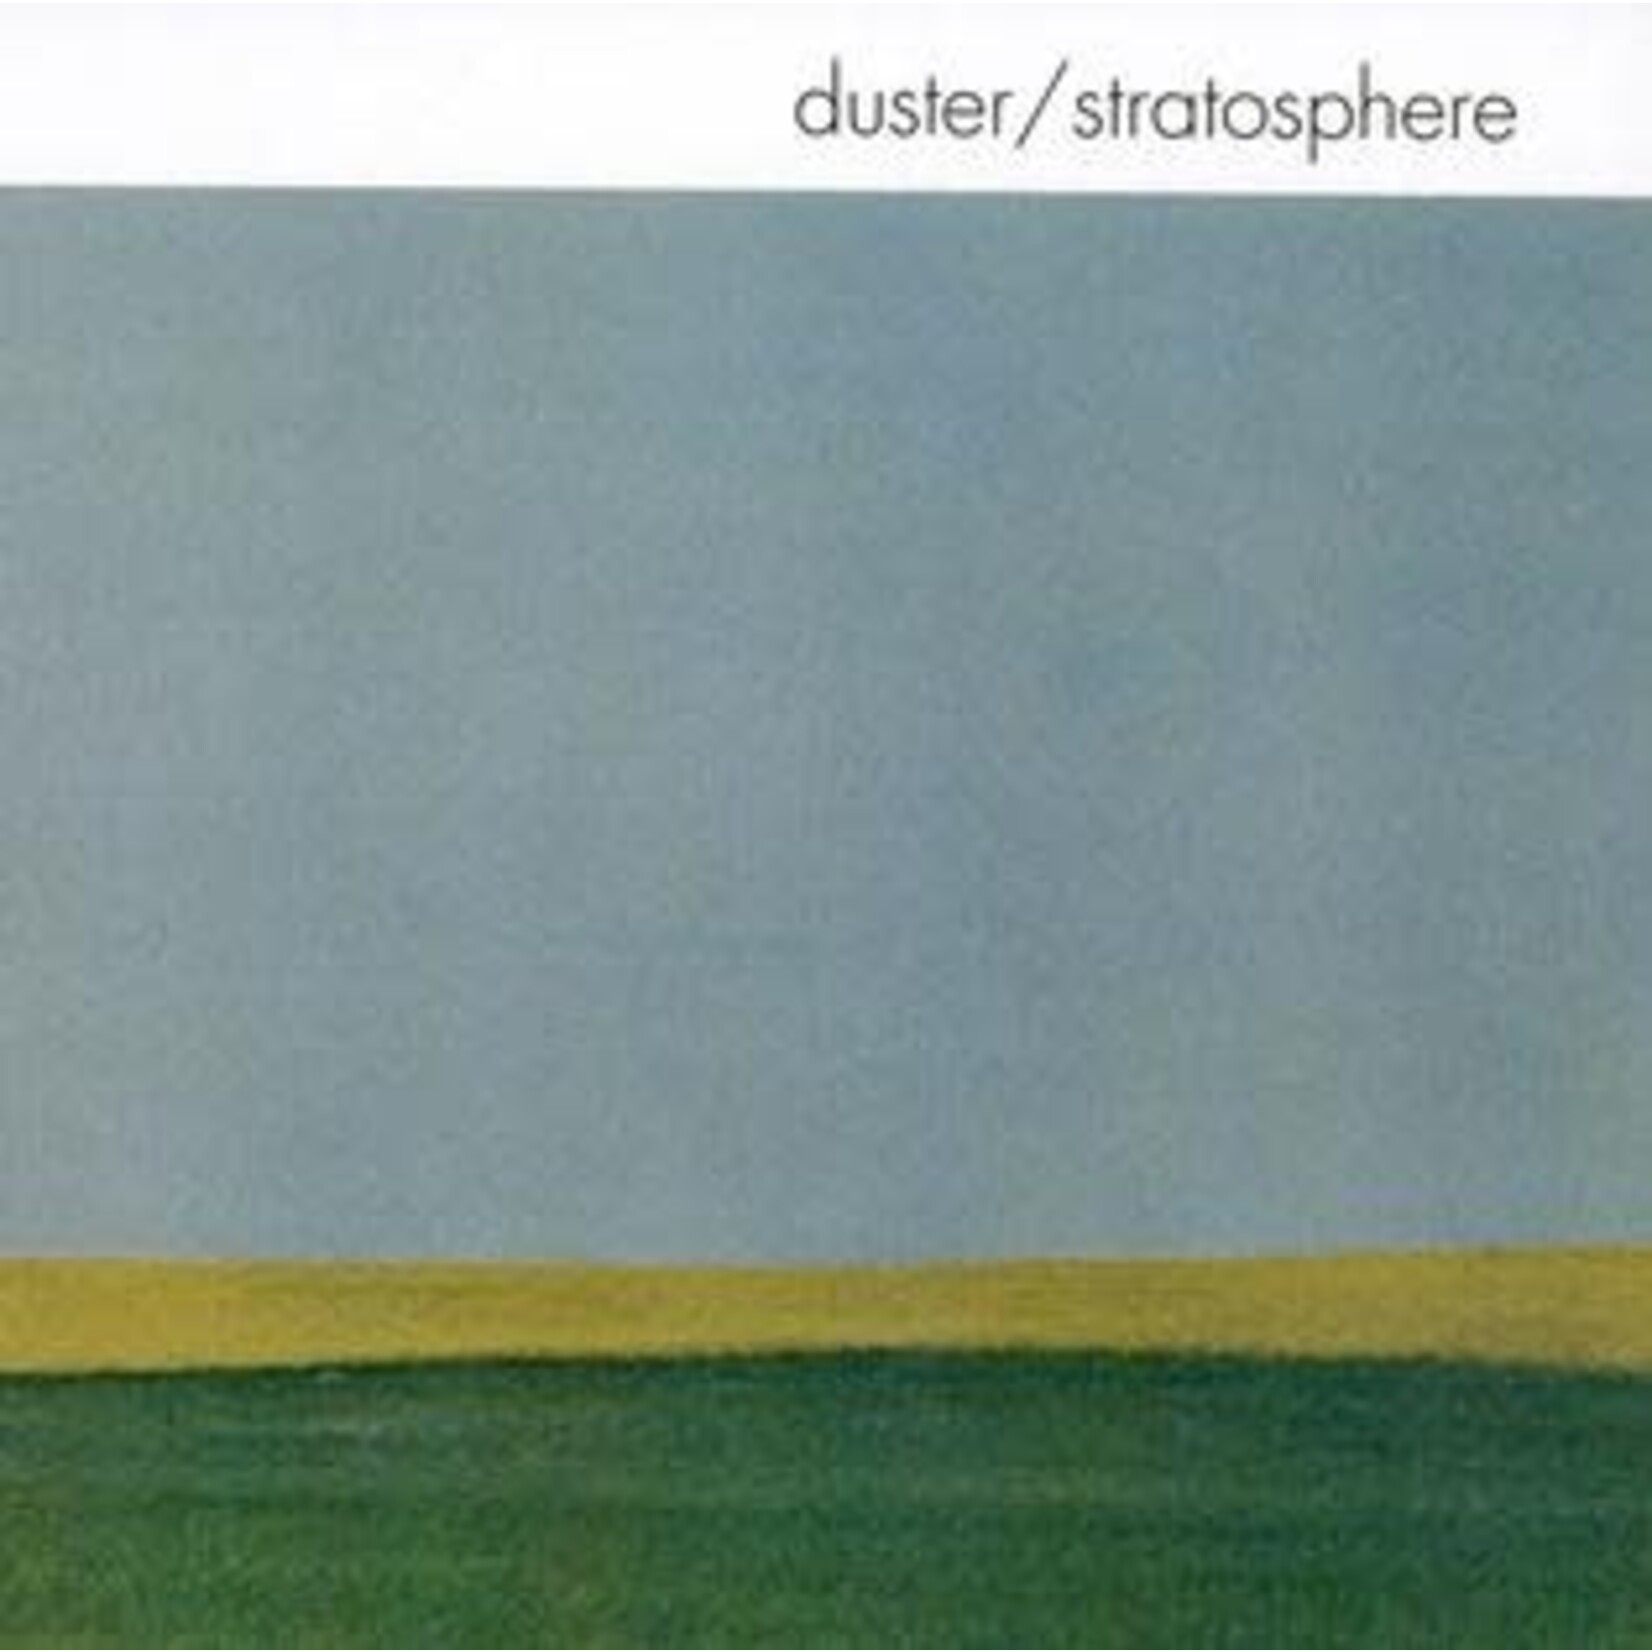 [New] Duster - Stratosphere (25th anniversary edition, 180g, black vinyl)